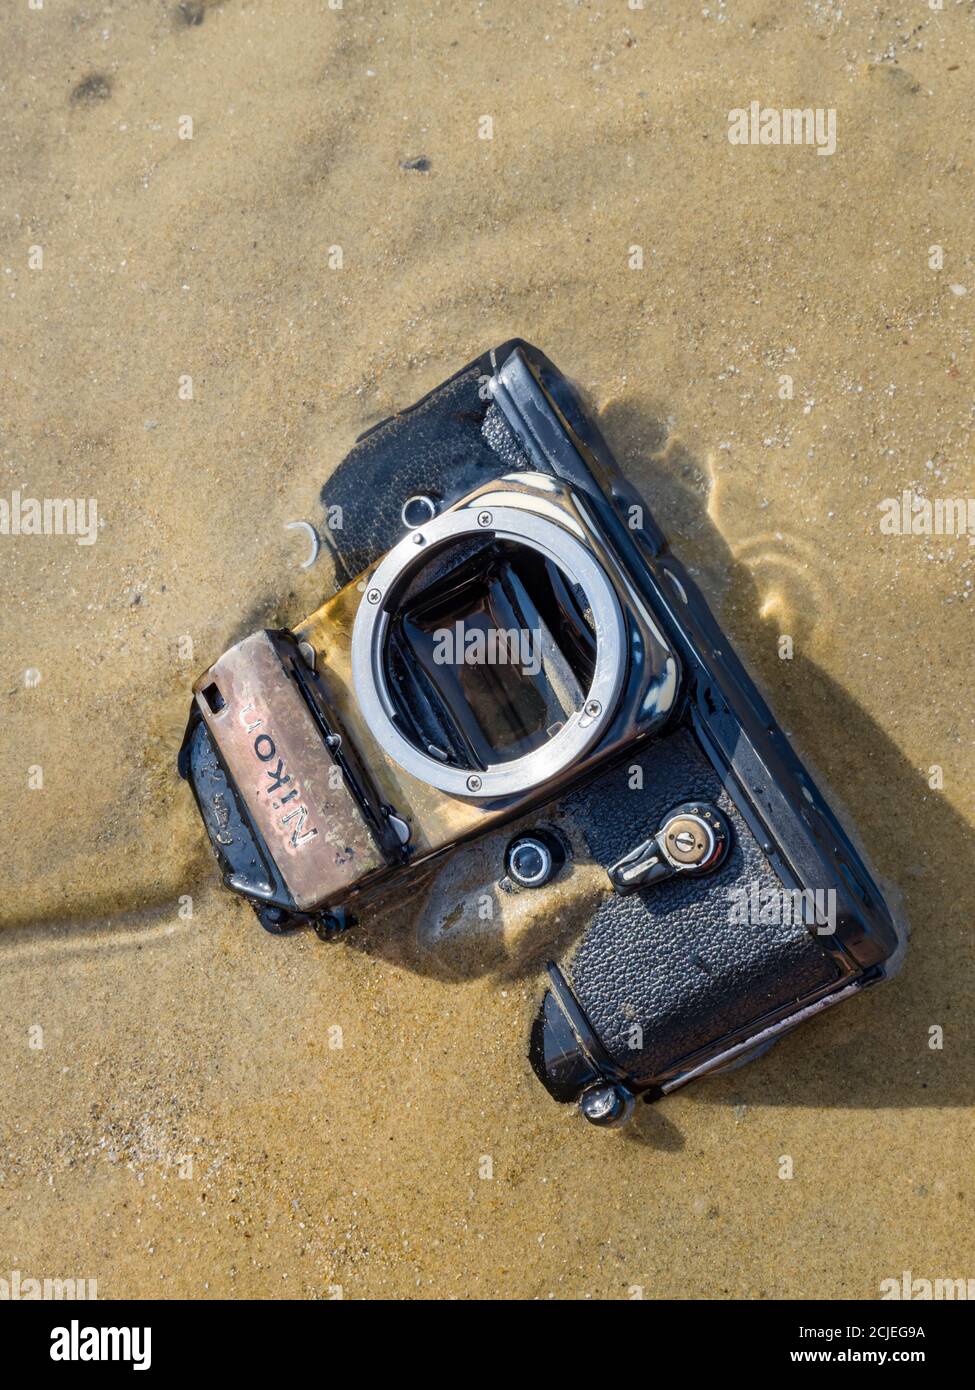 Nikon retro classic SLR film camera on beach Stock Photo